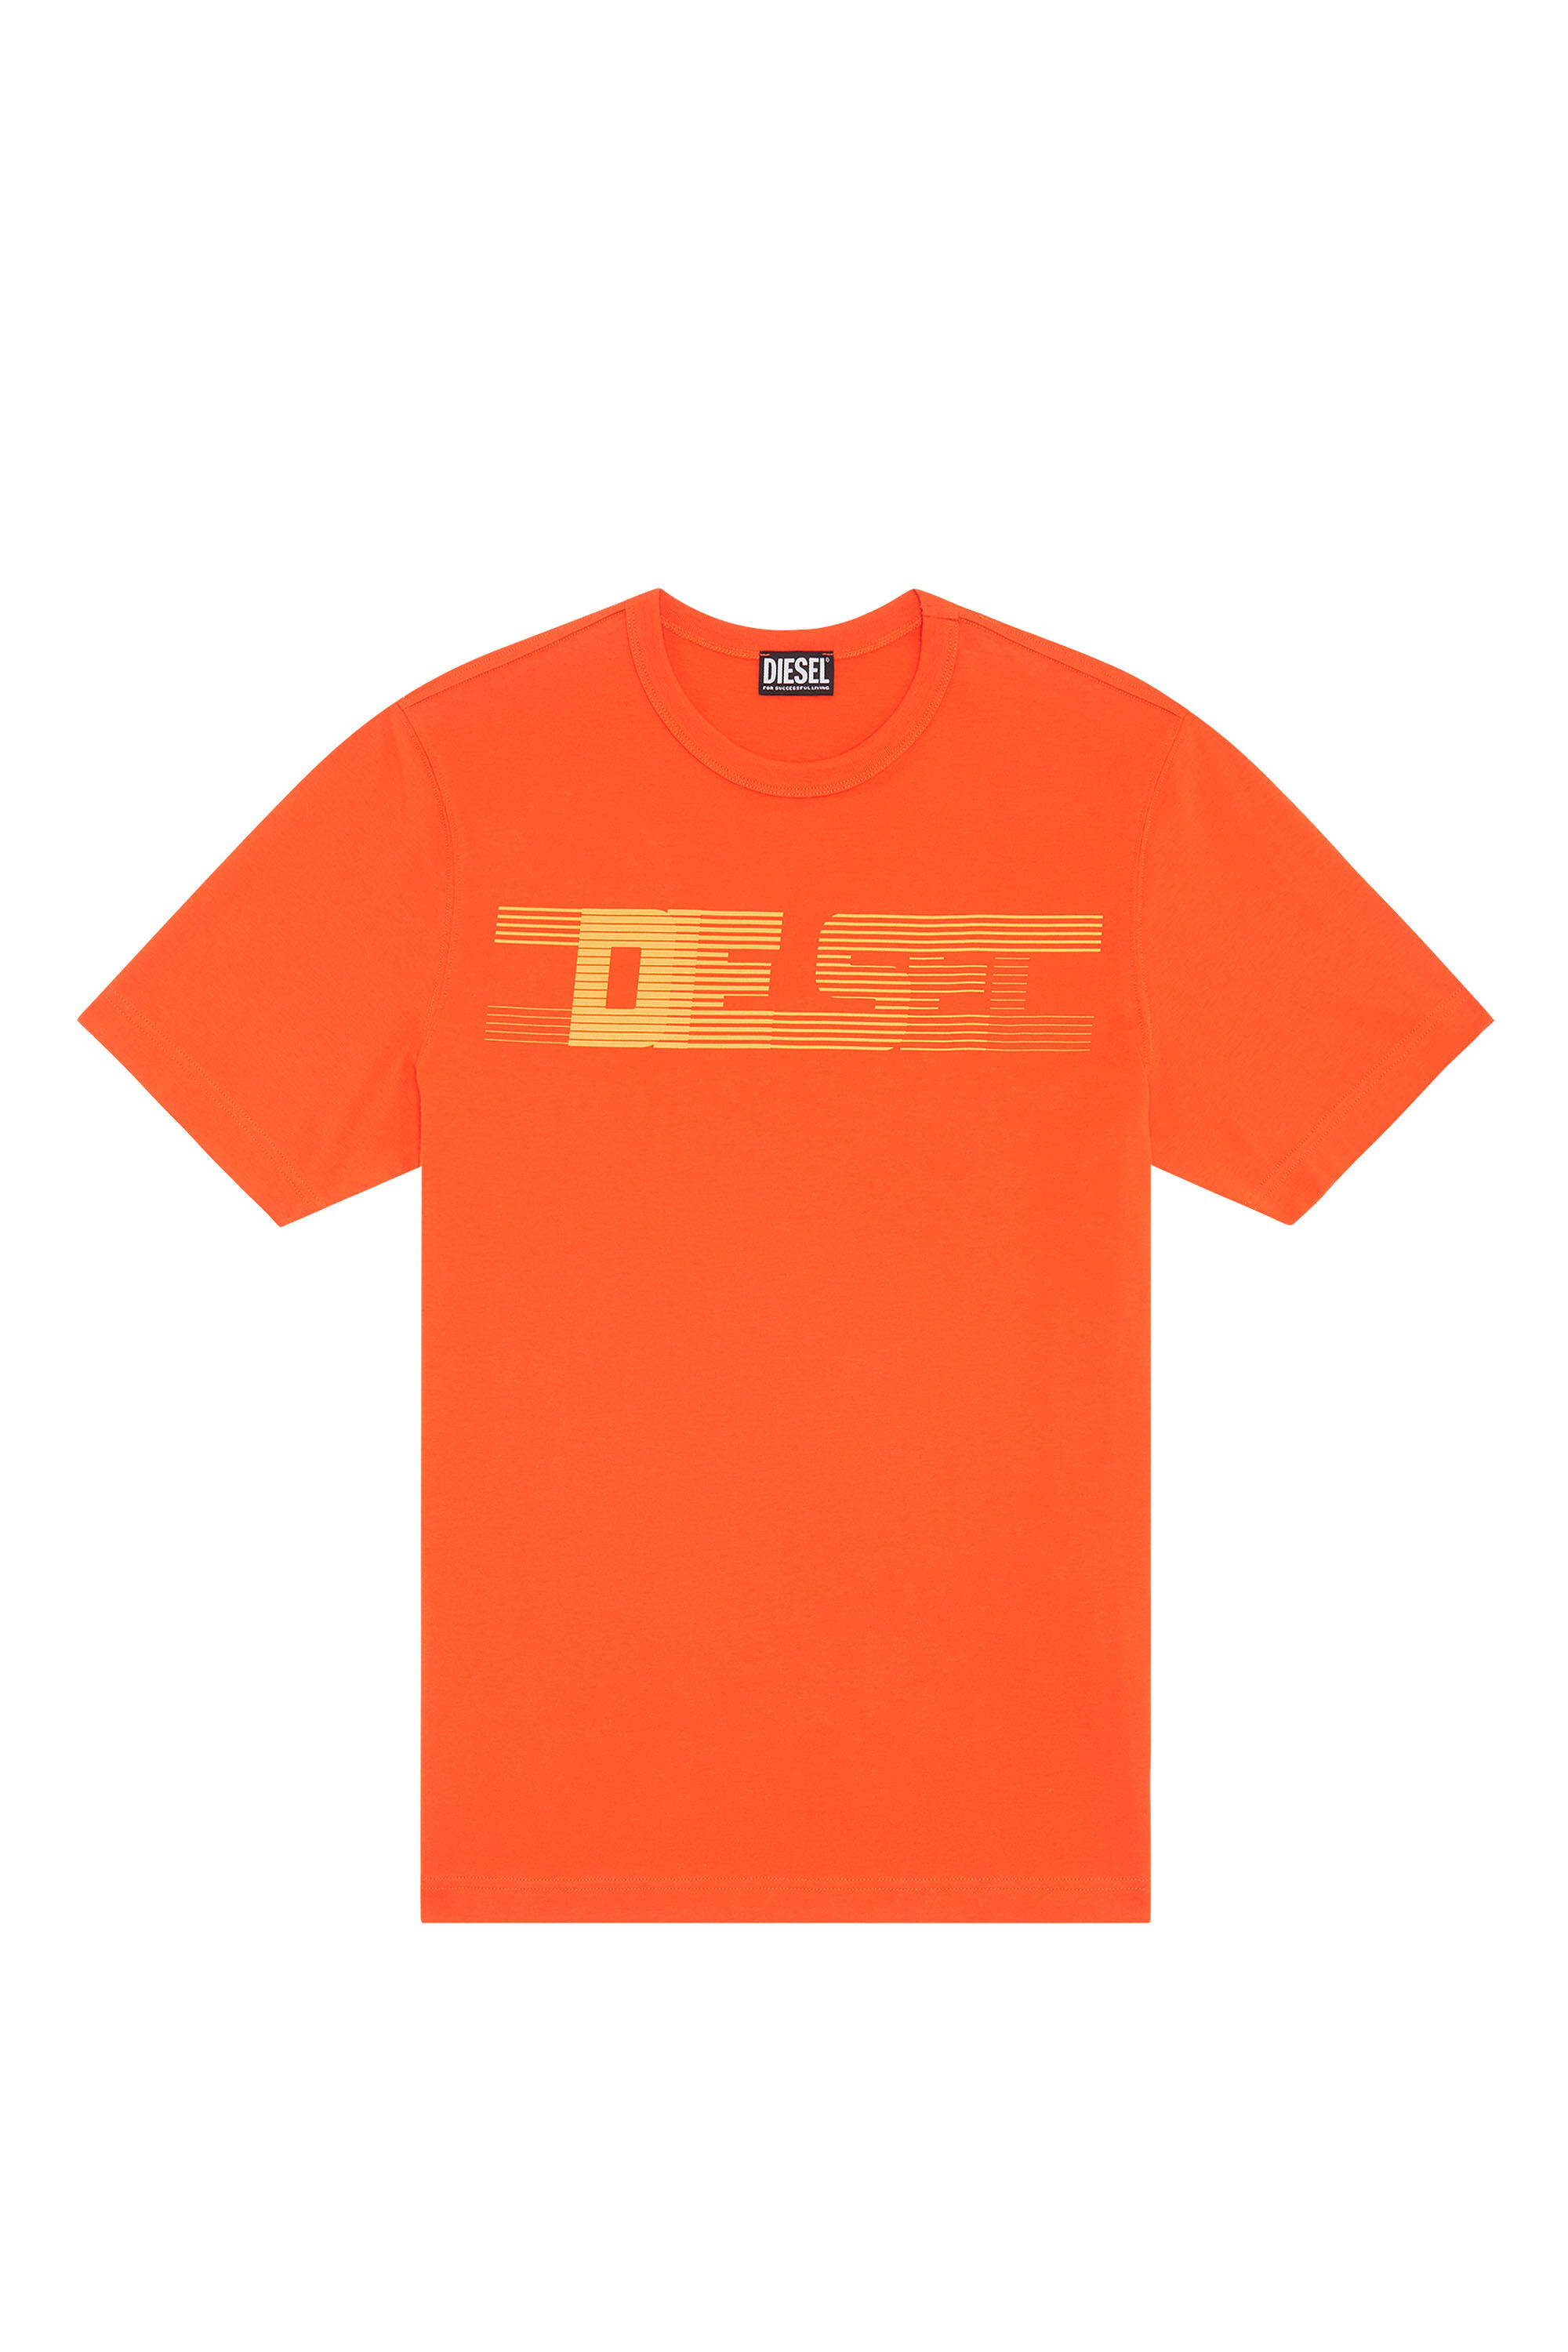 Diesel - T-JUST-E19, Orange - Image 2